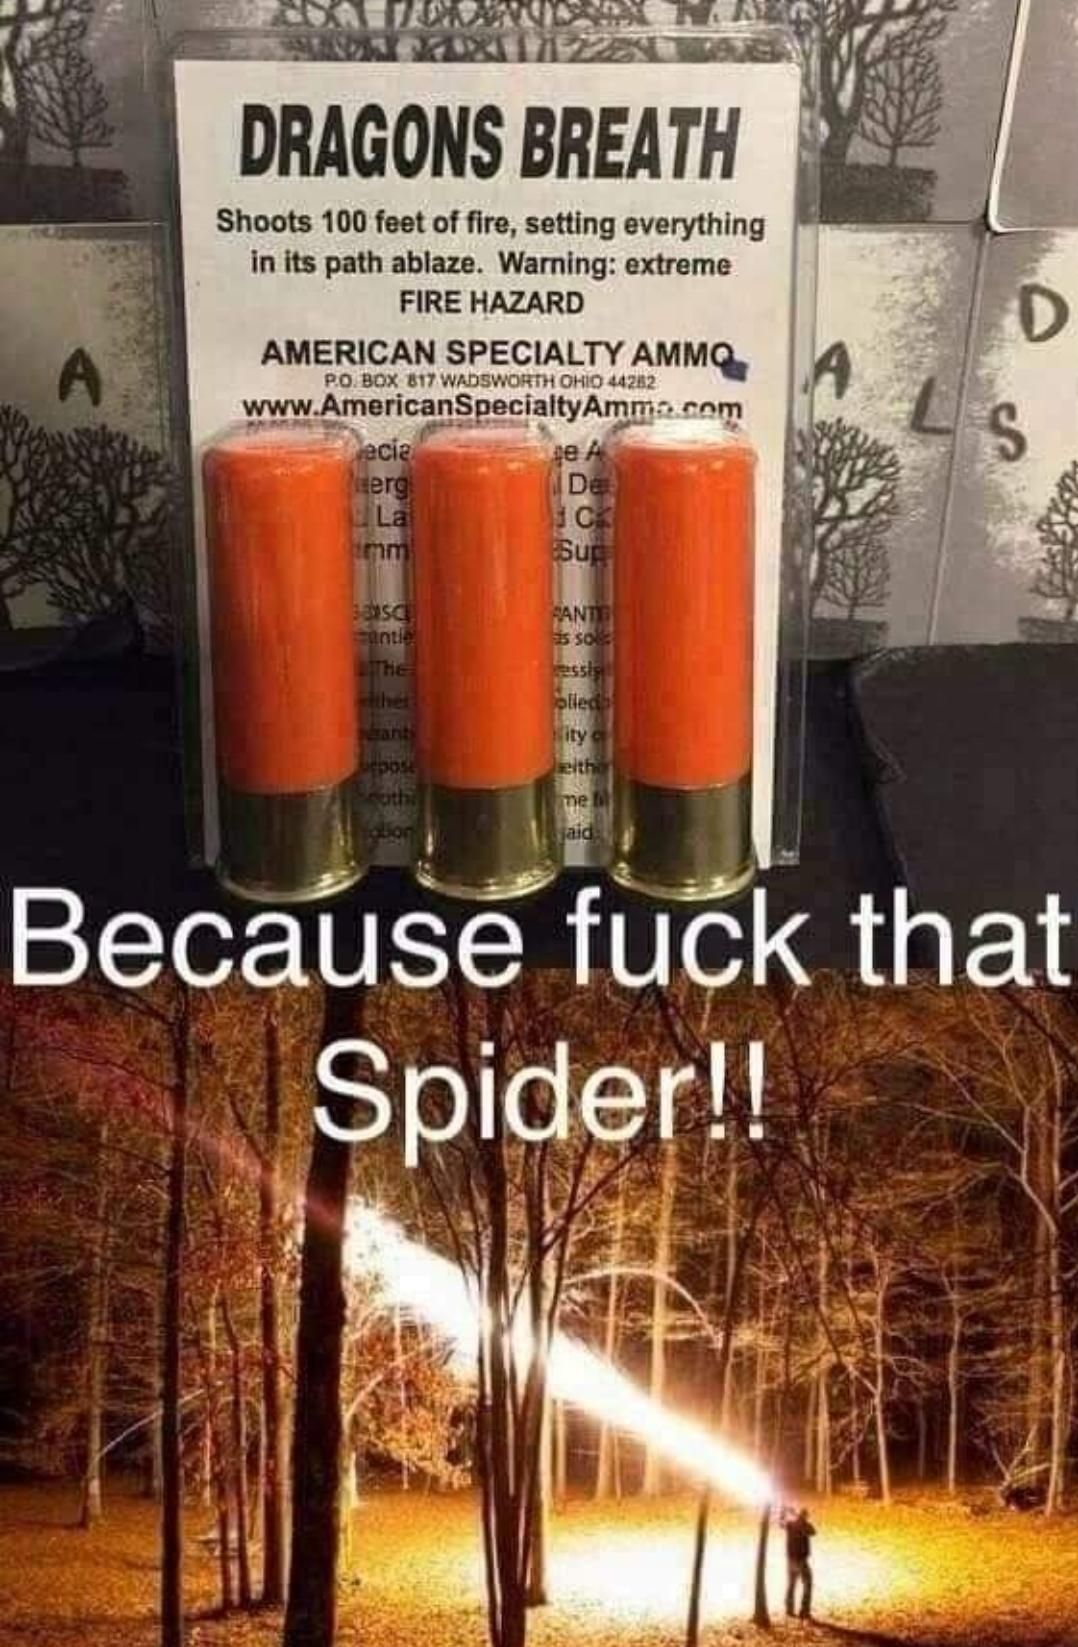 *** THAT SPIDER SPECIFICALLY